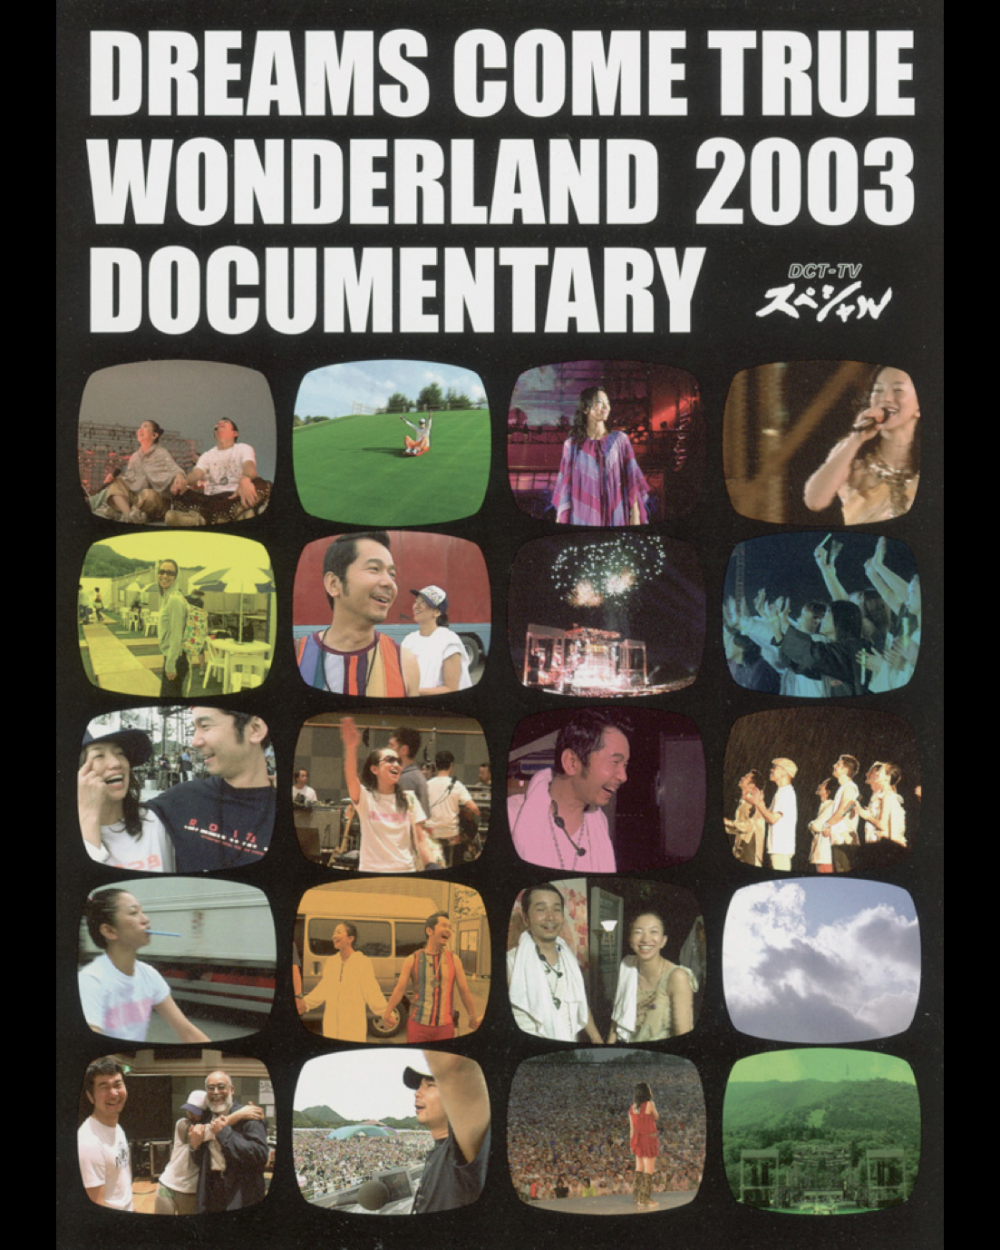 DREAMS COME TRUE【DVD】DCT-TV スペシャル  DREAMS COME TRUE WONDERLAND 2003 DOCUMENTARY 